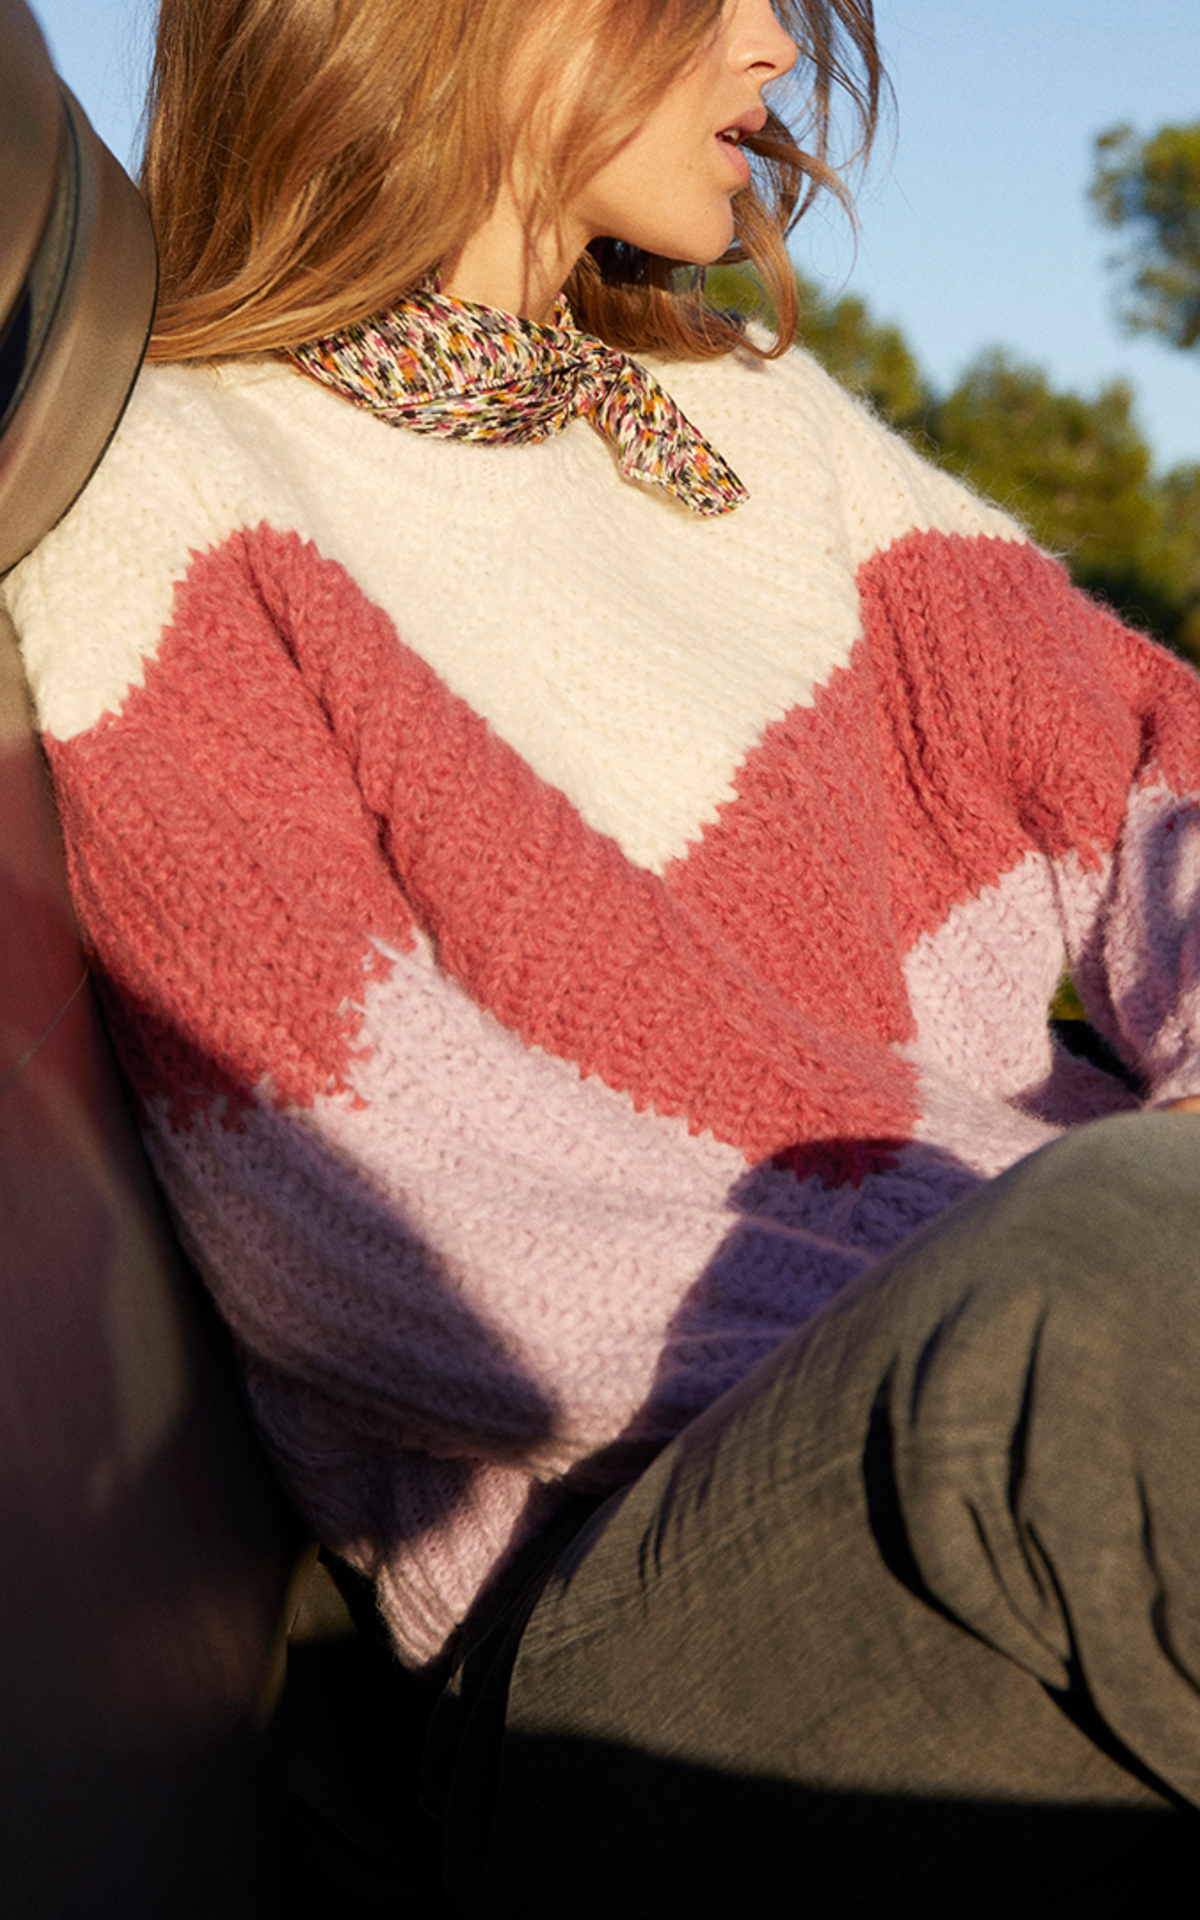 Woman wearing a ba&sh sweater